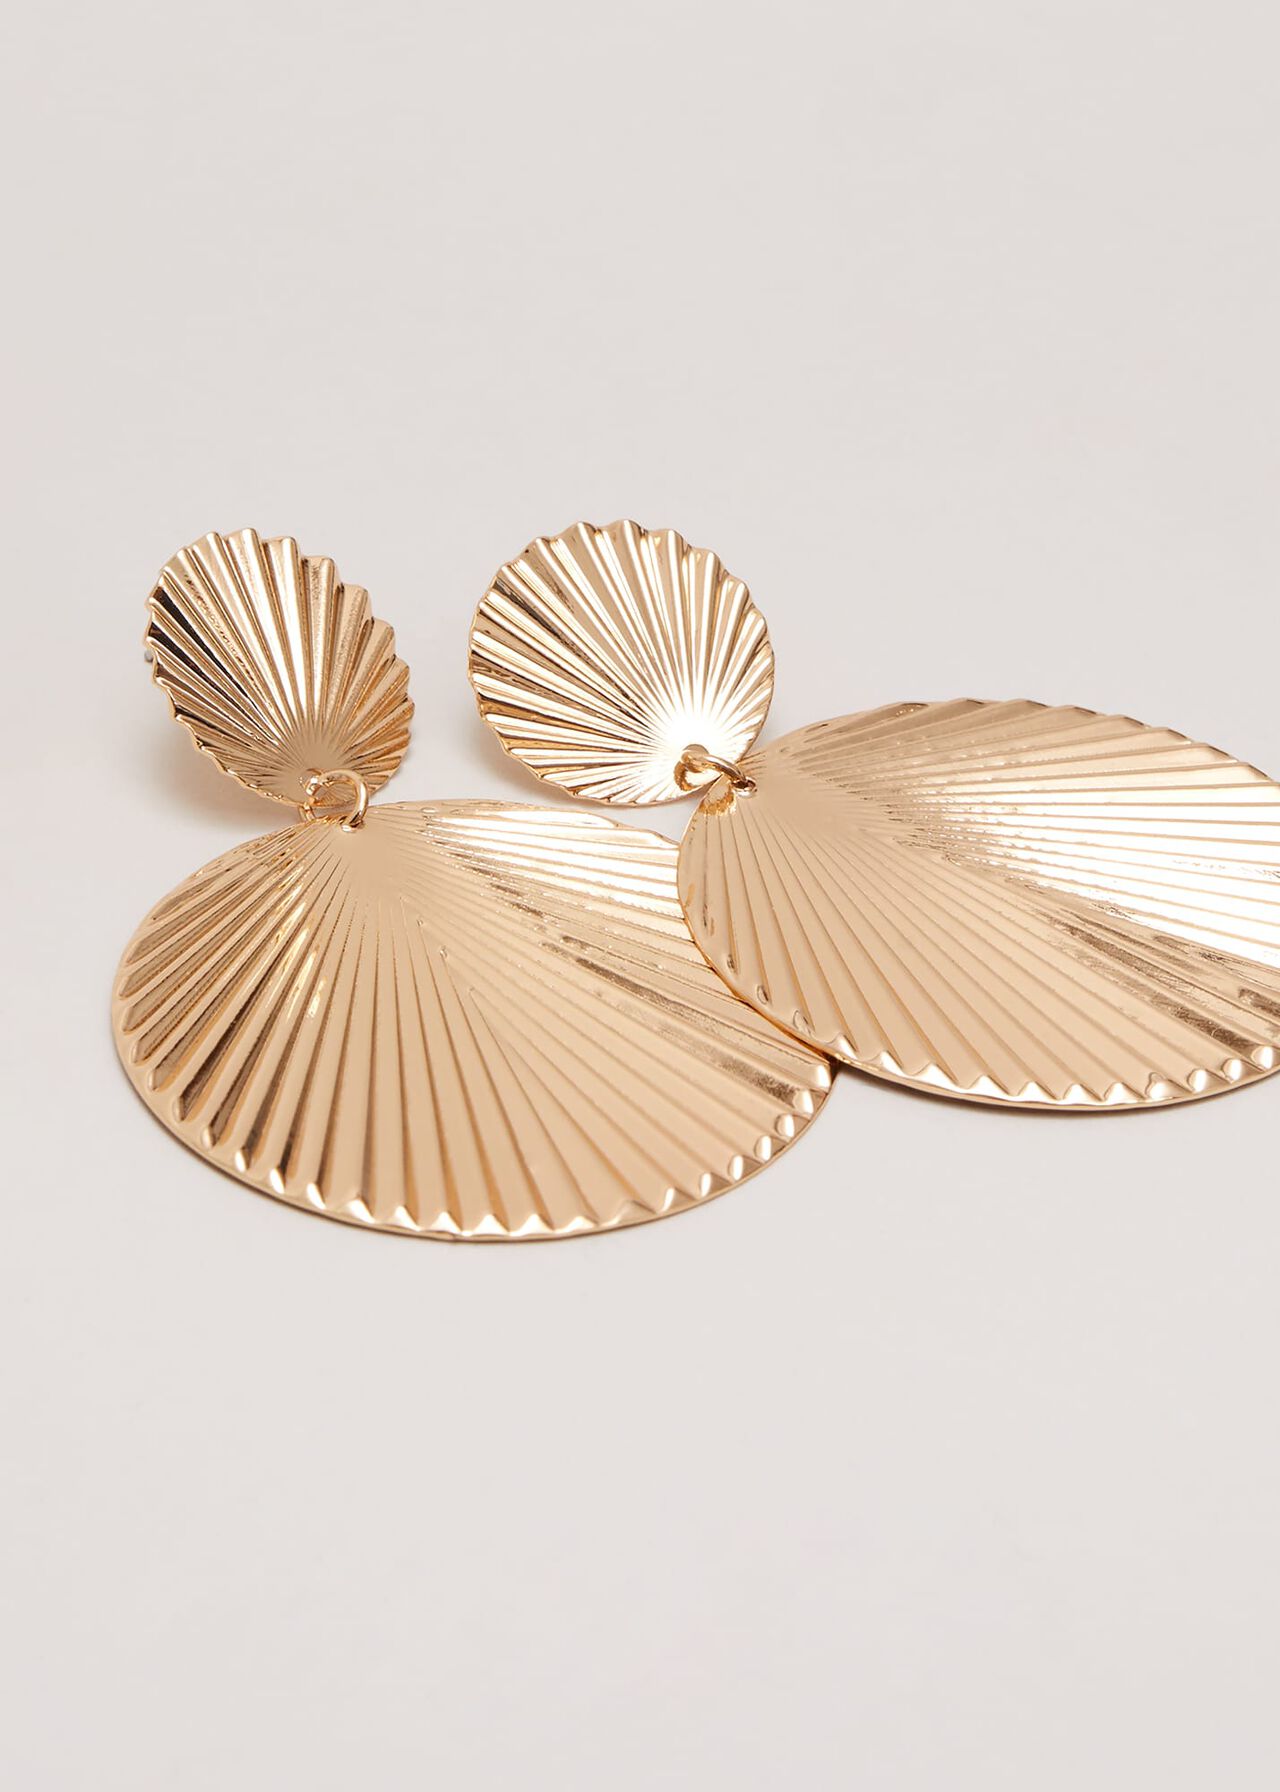 Gold Textured Circular Drop Earrings